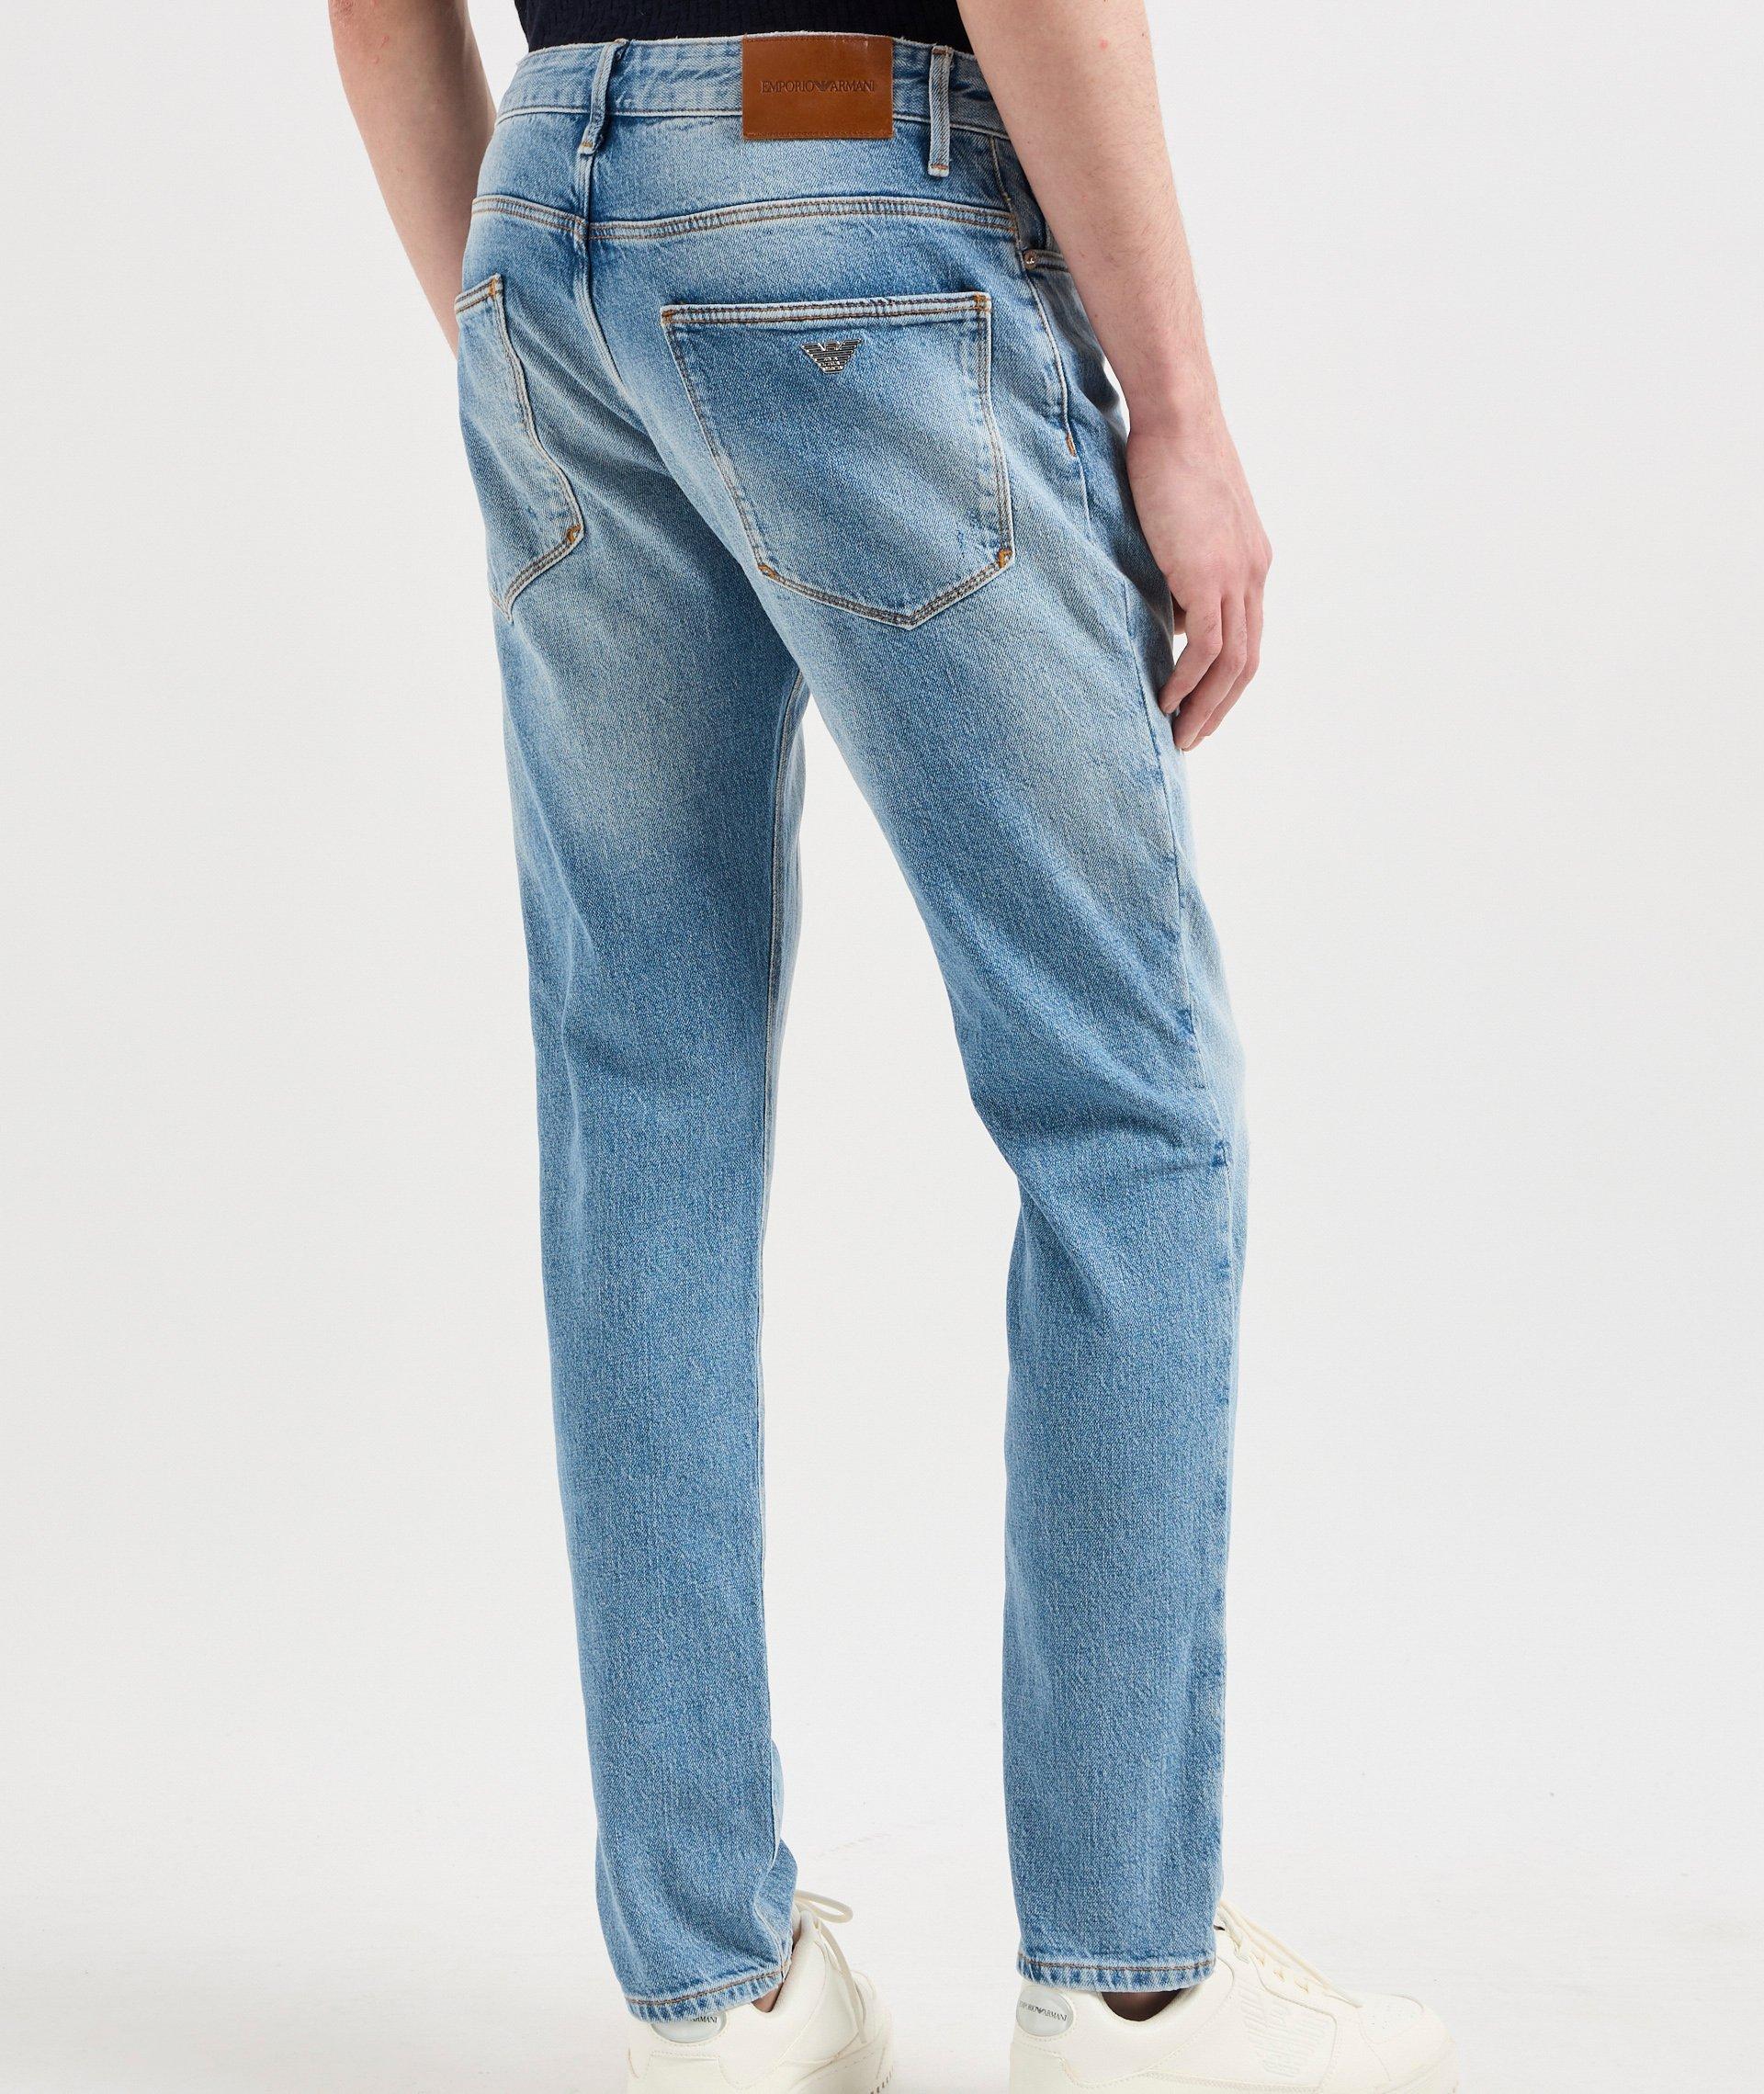 J06 Slim Fit Stretch-Cotton Jeans image 3